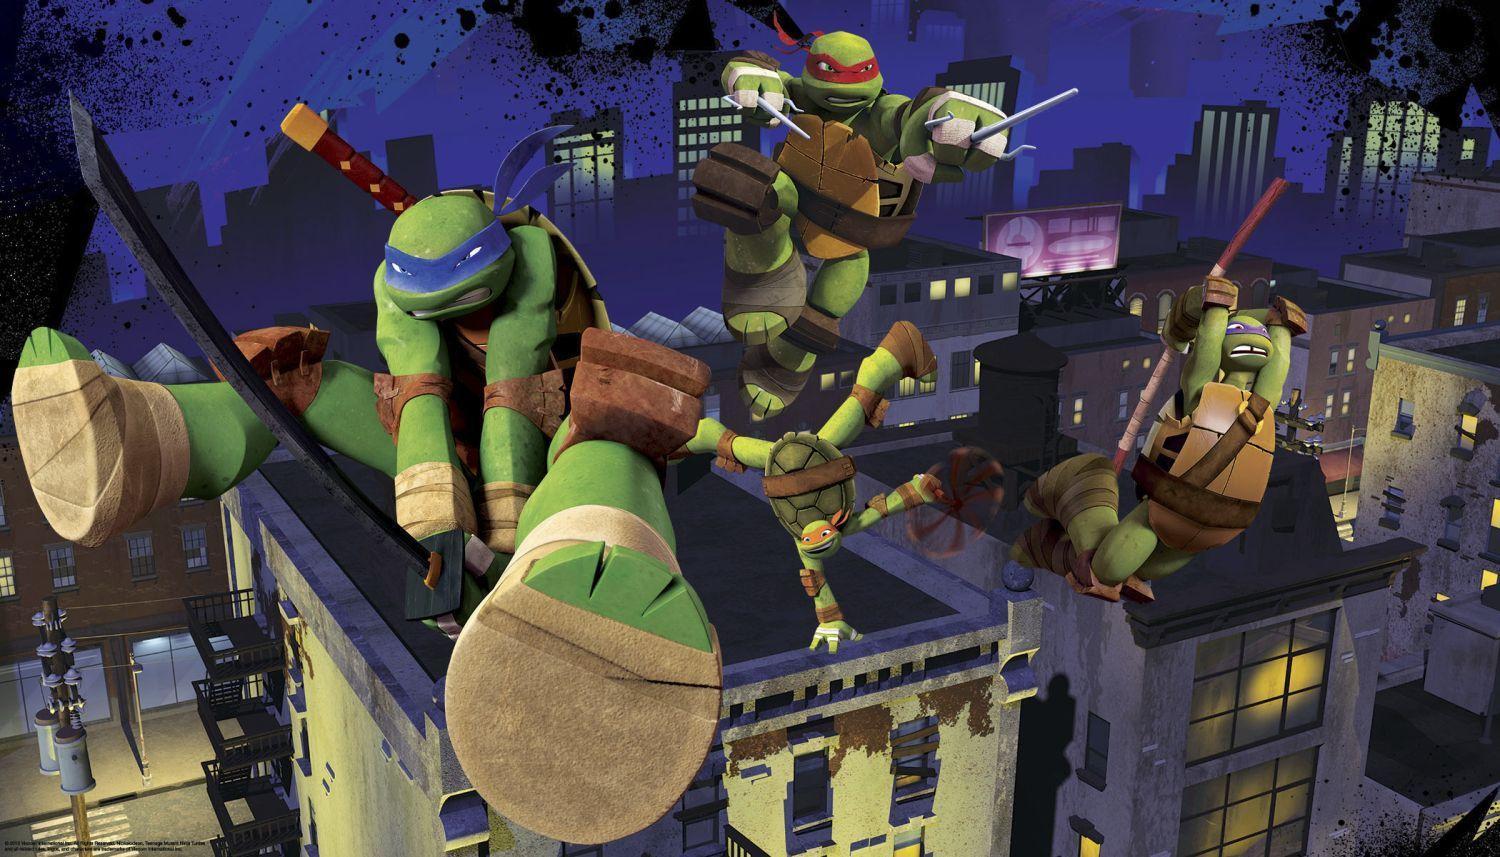 Teenage Mutant Ninja Turtles XL Wallpaper Mural, Popular Character